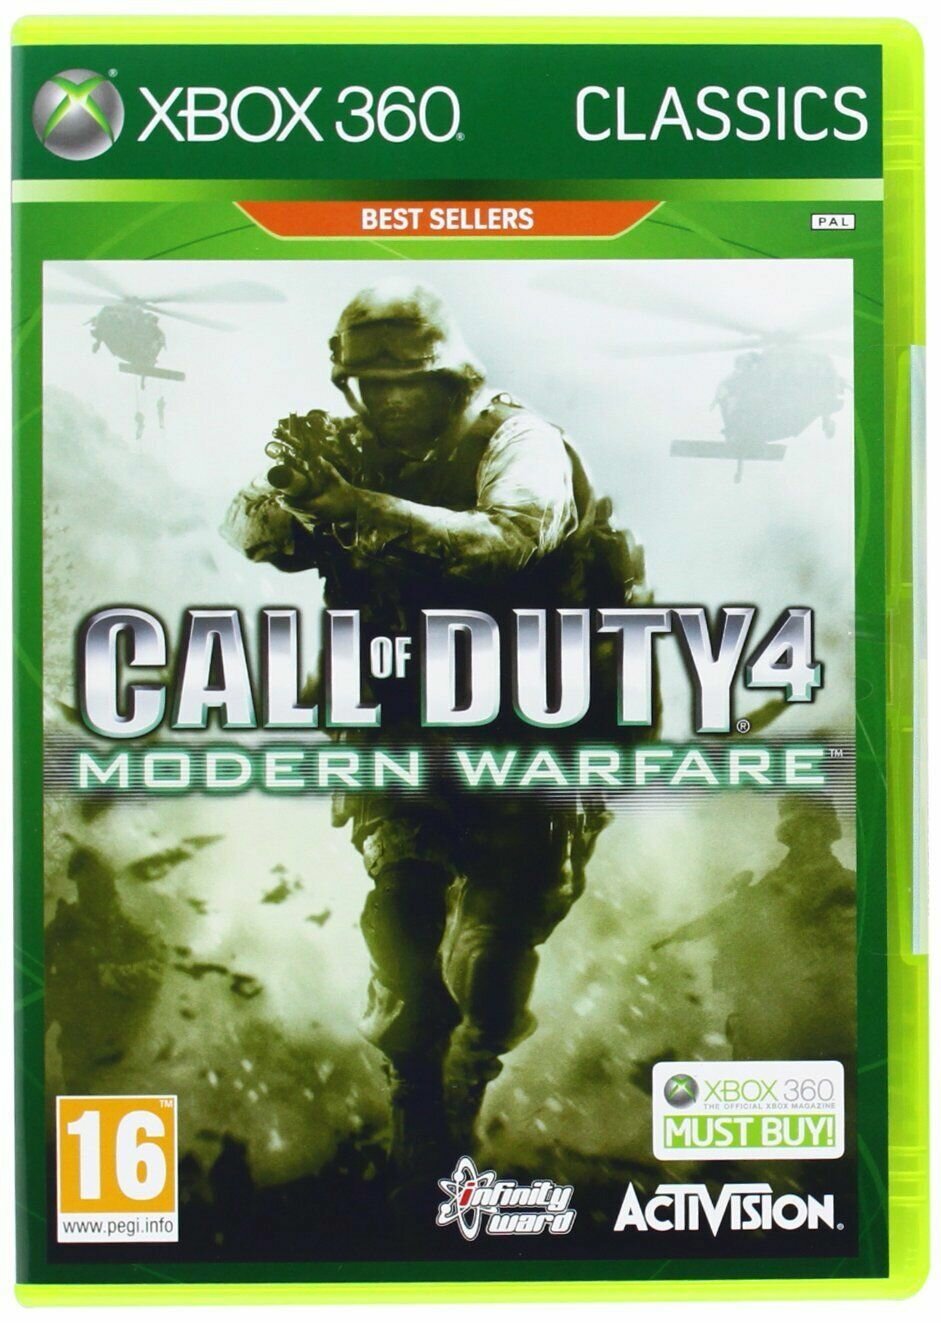 Call of Duty 4 Modern Warfare (Classic) (Xbox 360)